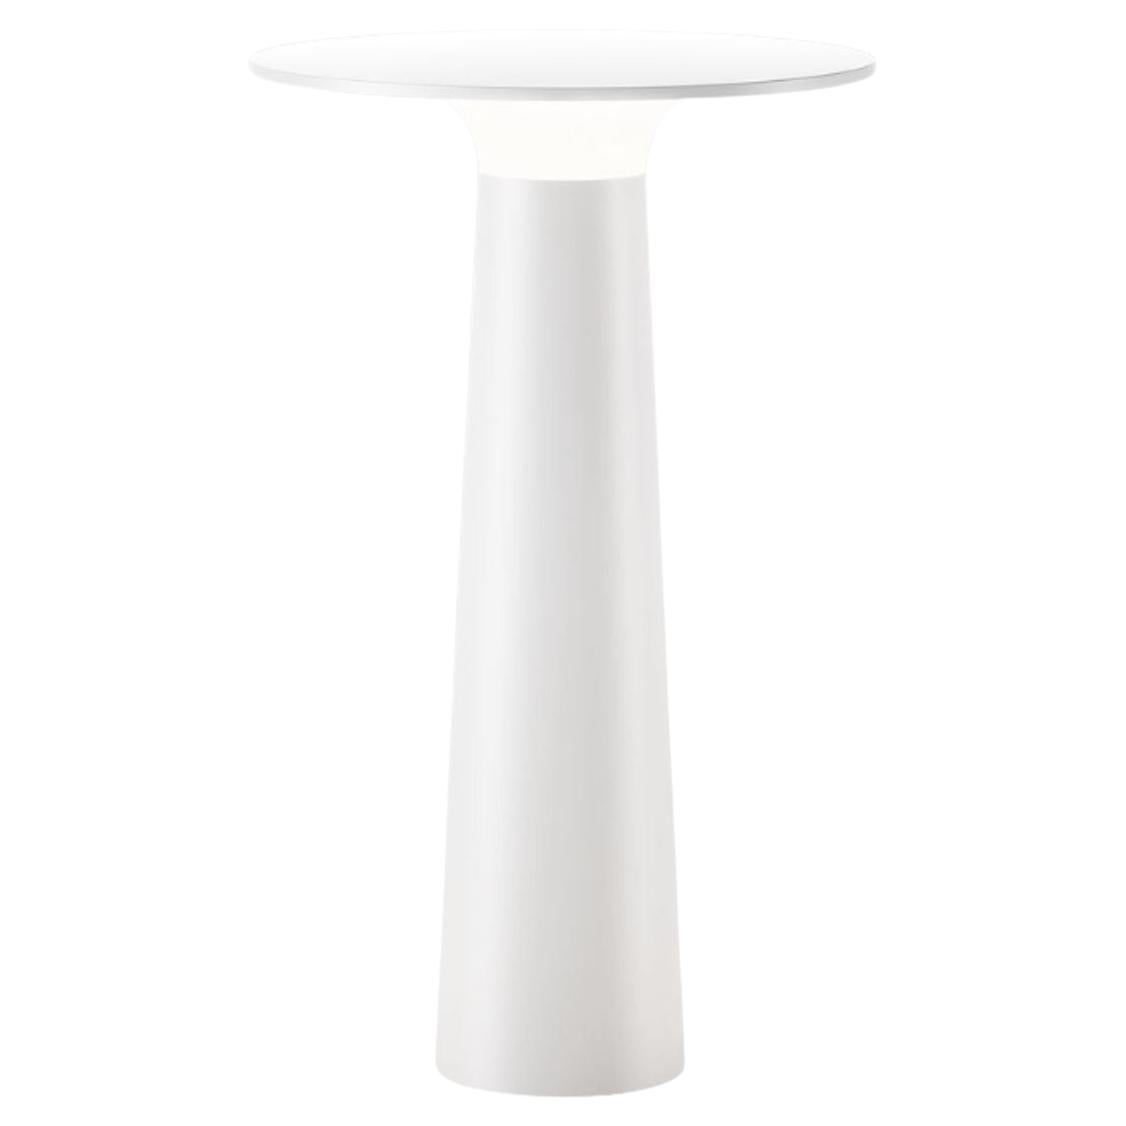 Klaus Nolting 'Lix' Portable Outdoor Aluminum Table Lamp in Sage for IP44de For Sale 2